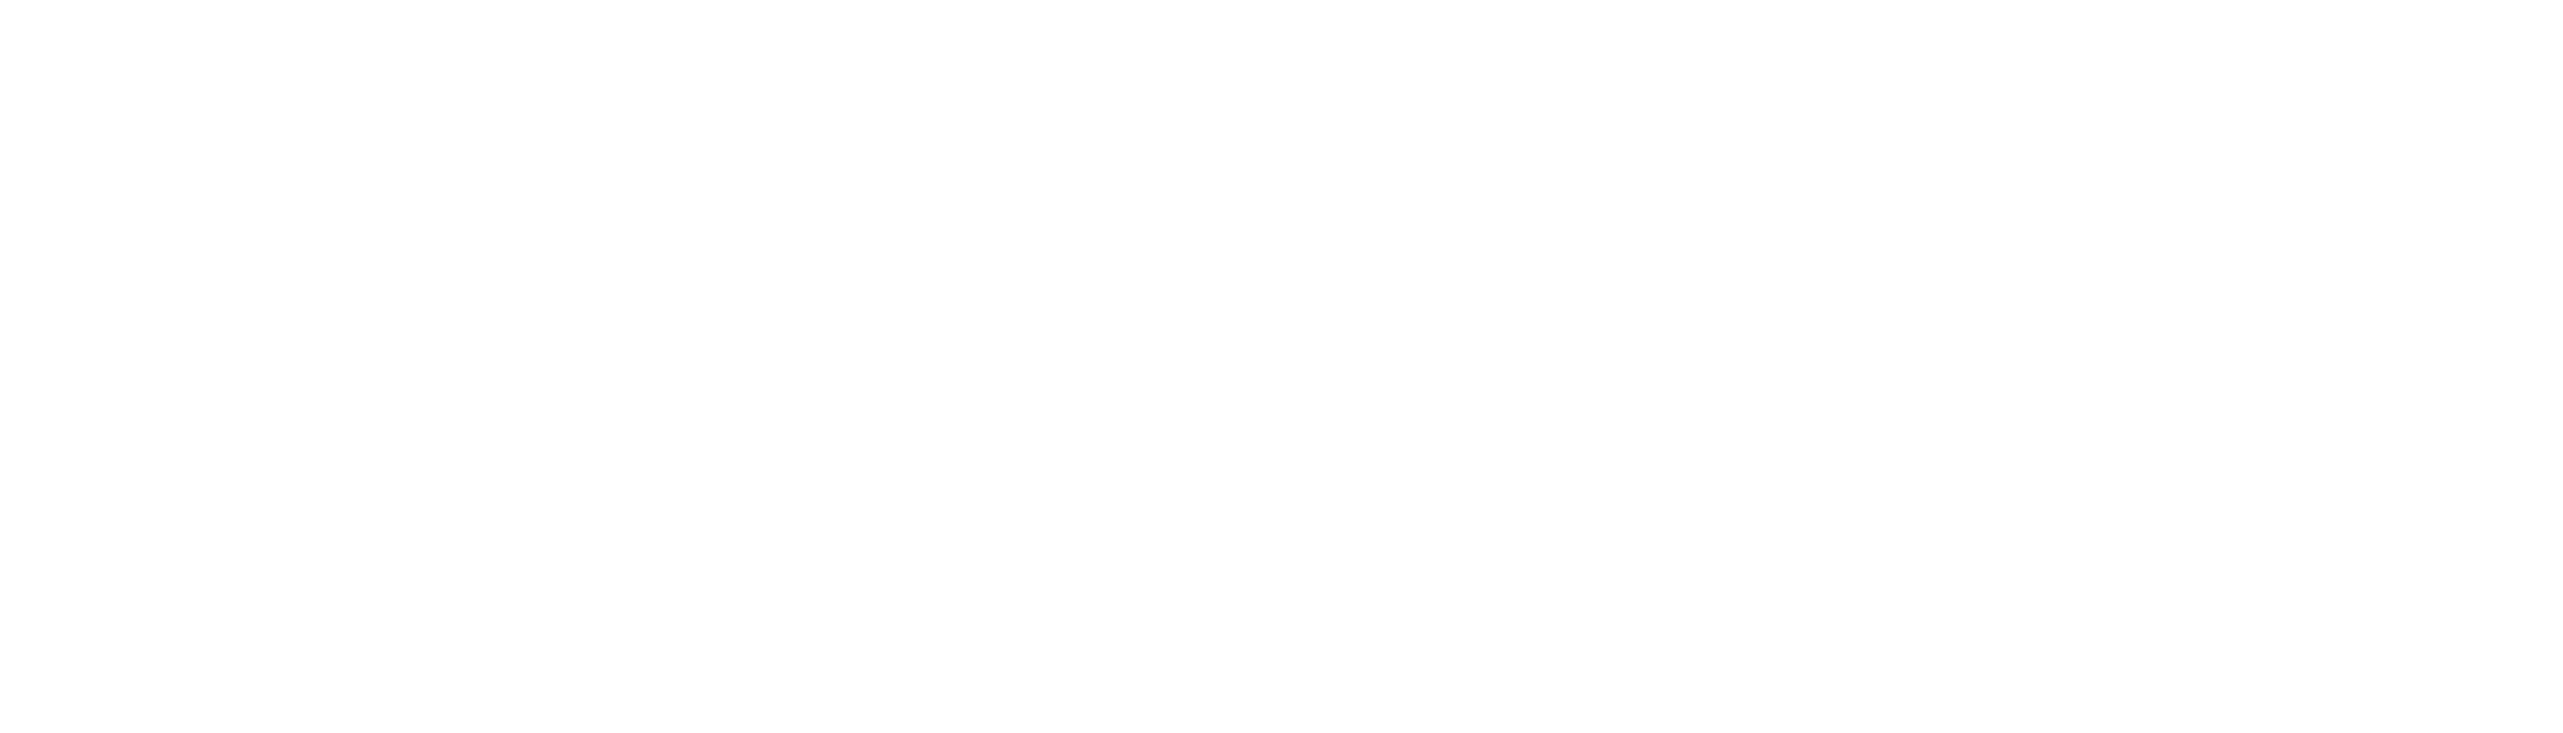 Motorola 2018 Logo - File:Motorola Logo White.png - Wikimedia Commons